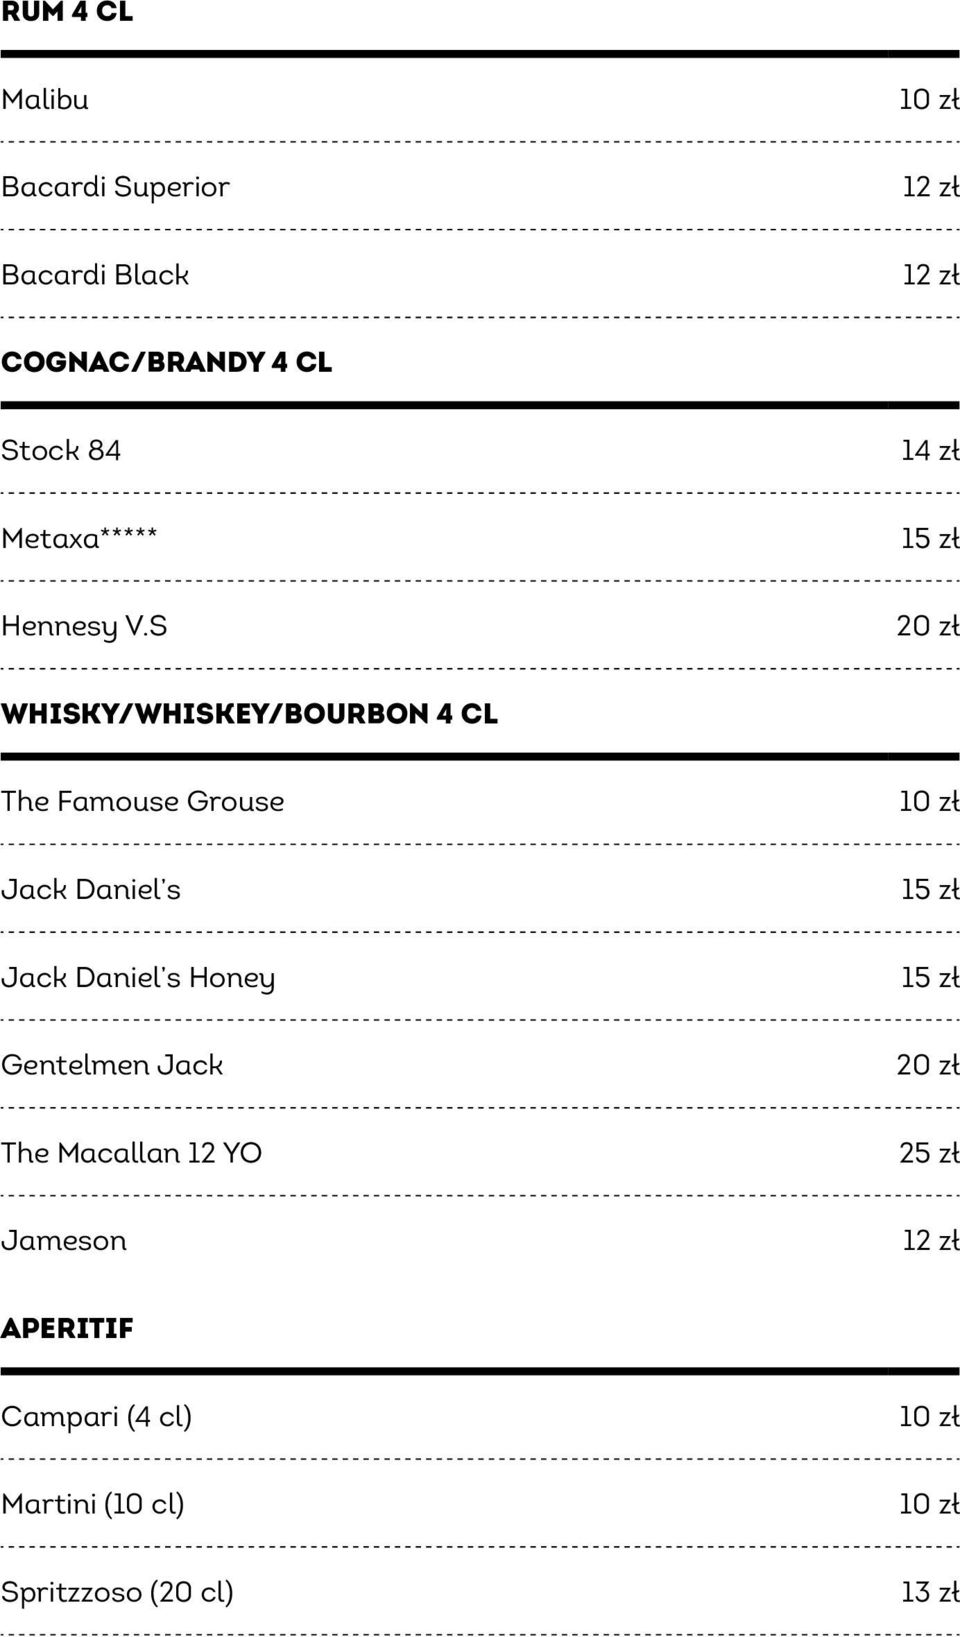 S 20 zł whisky/whiskey/bourbon 4 cl The Famouse Grouse Jack Daniel s 15 zł Jack Daniel